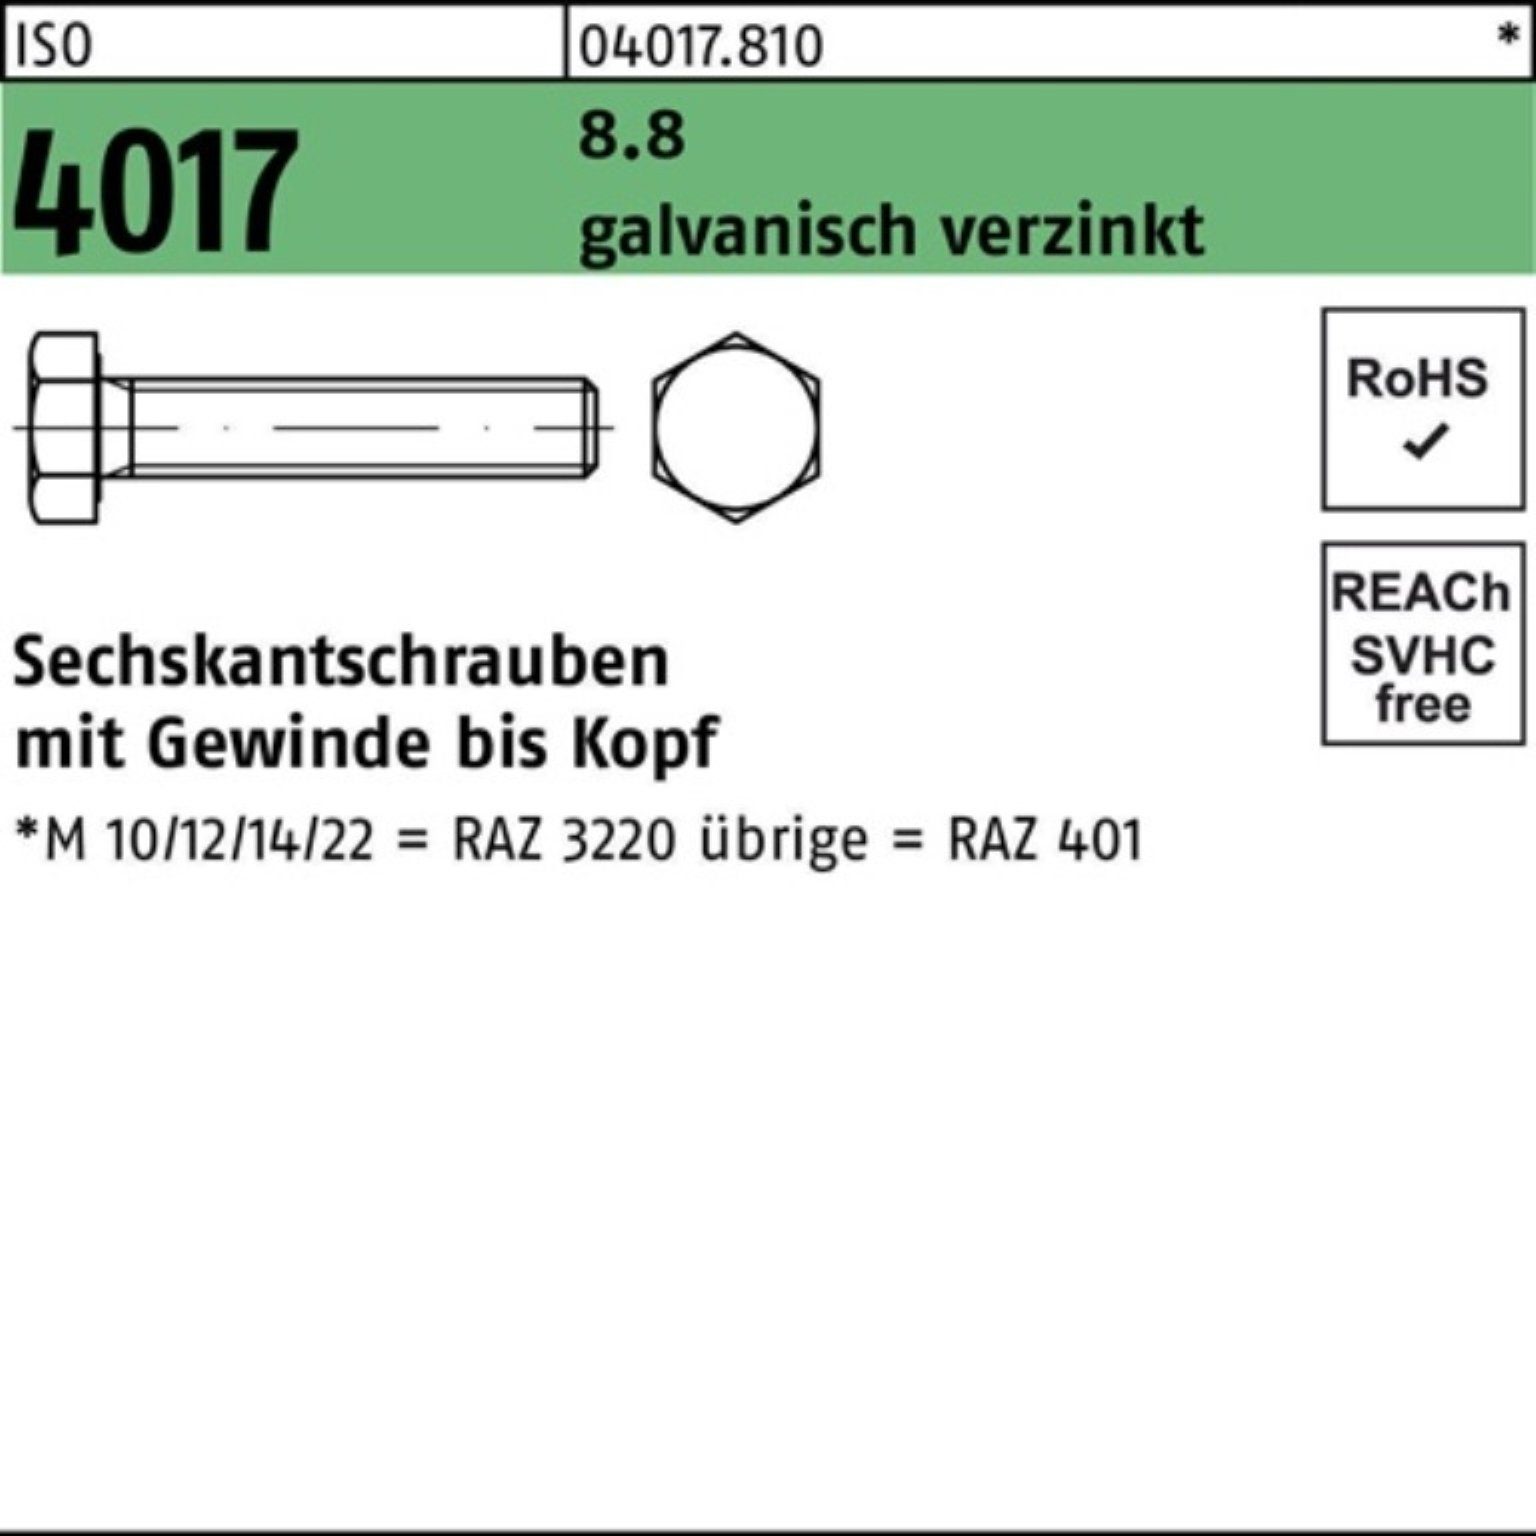 Bufab Sechskantschraube 1 100er 4017 M48x St galv.verz. Pack Sechskantschraube 8.8 VG ISO 140